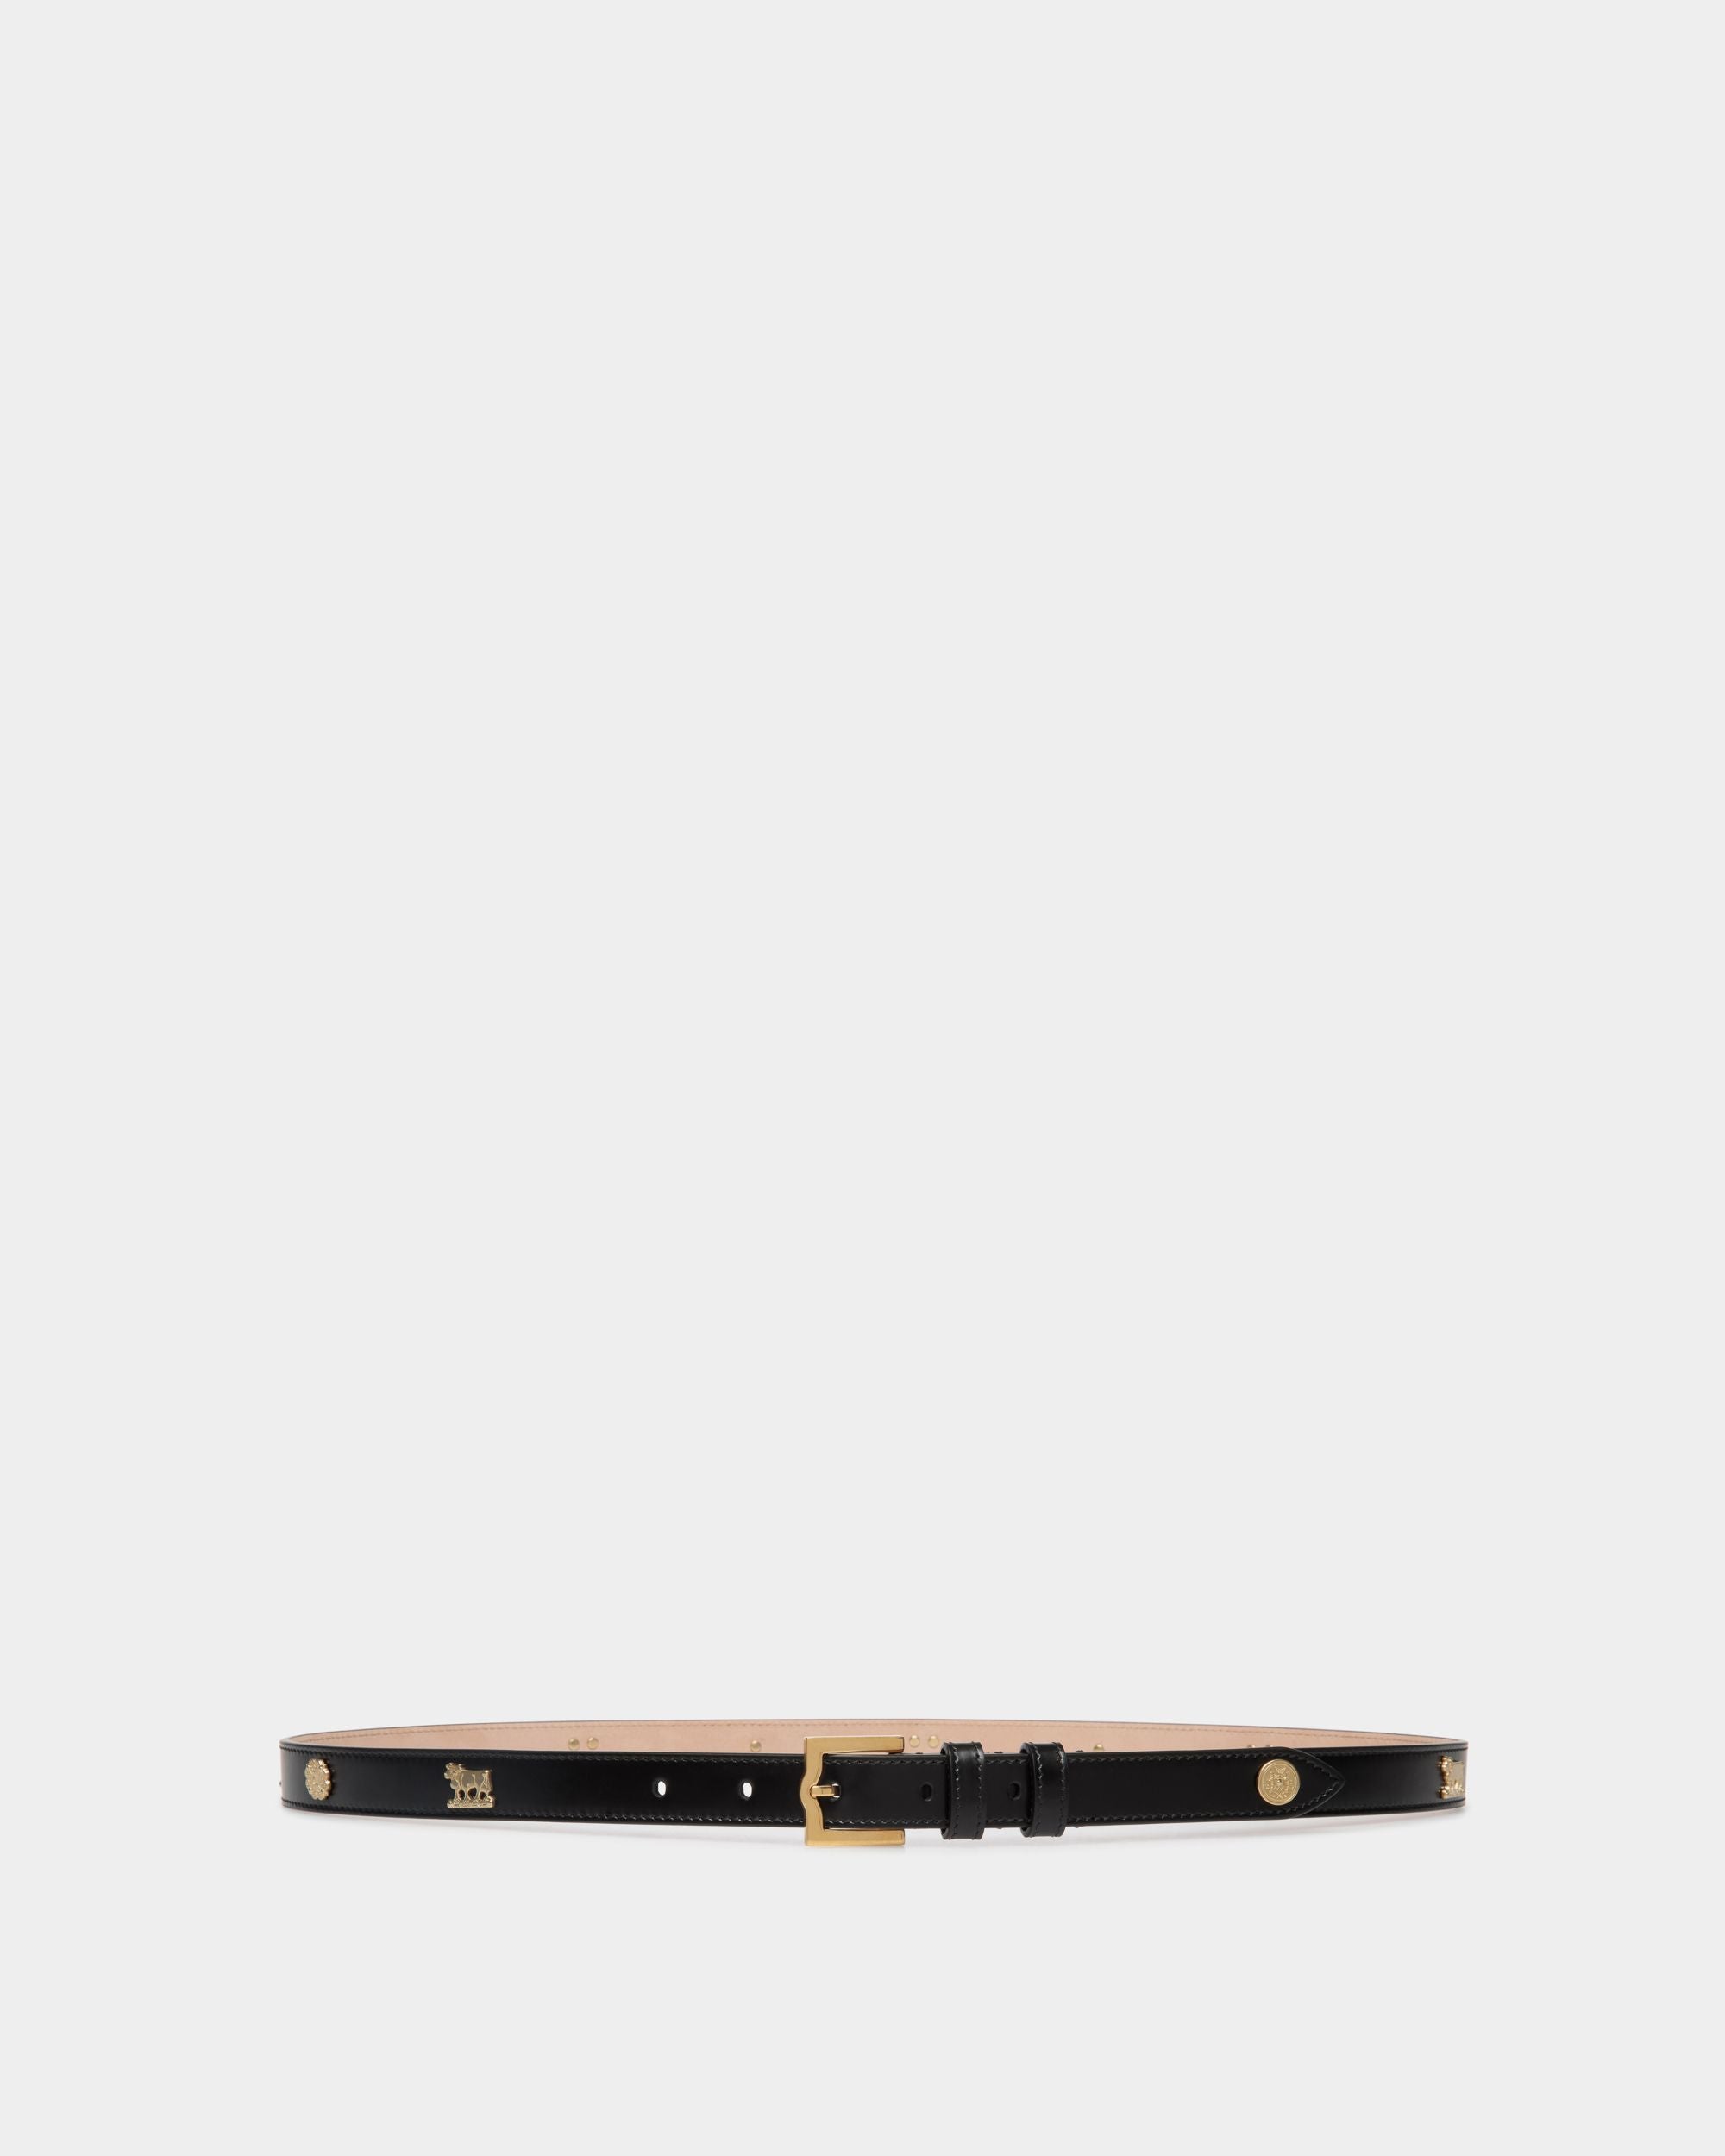 Emblem 95 cm | Cintura da donna in pelle spazzolata nera | Bally | Still Life Fronte